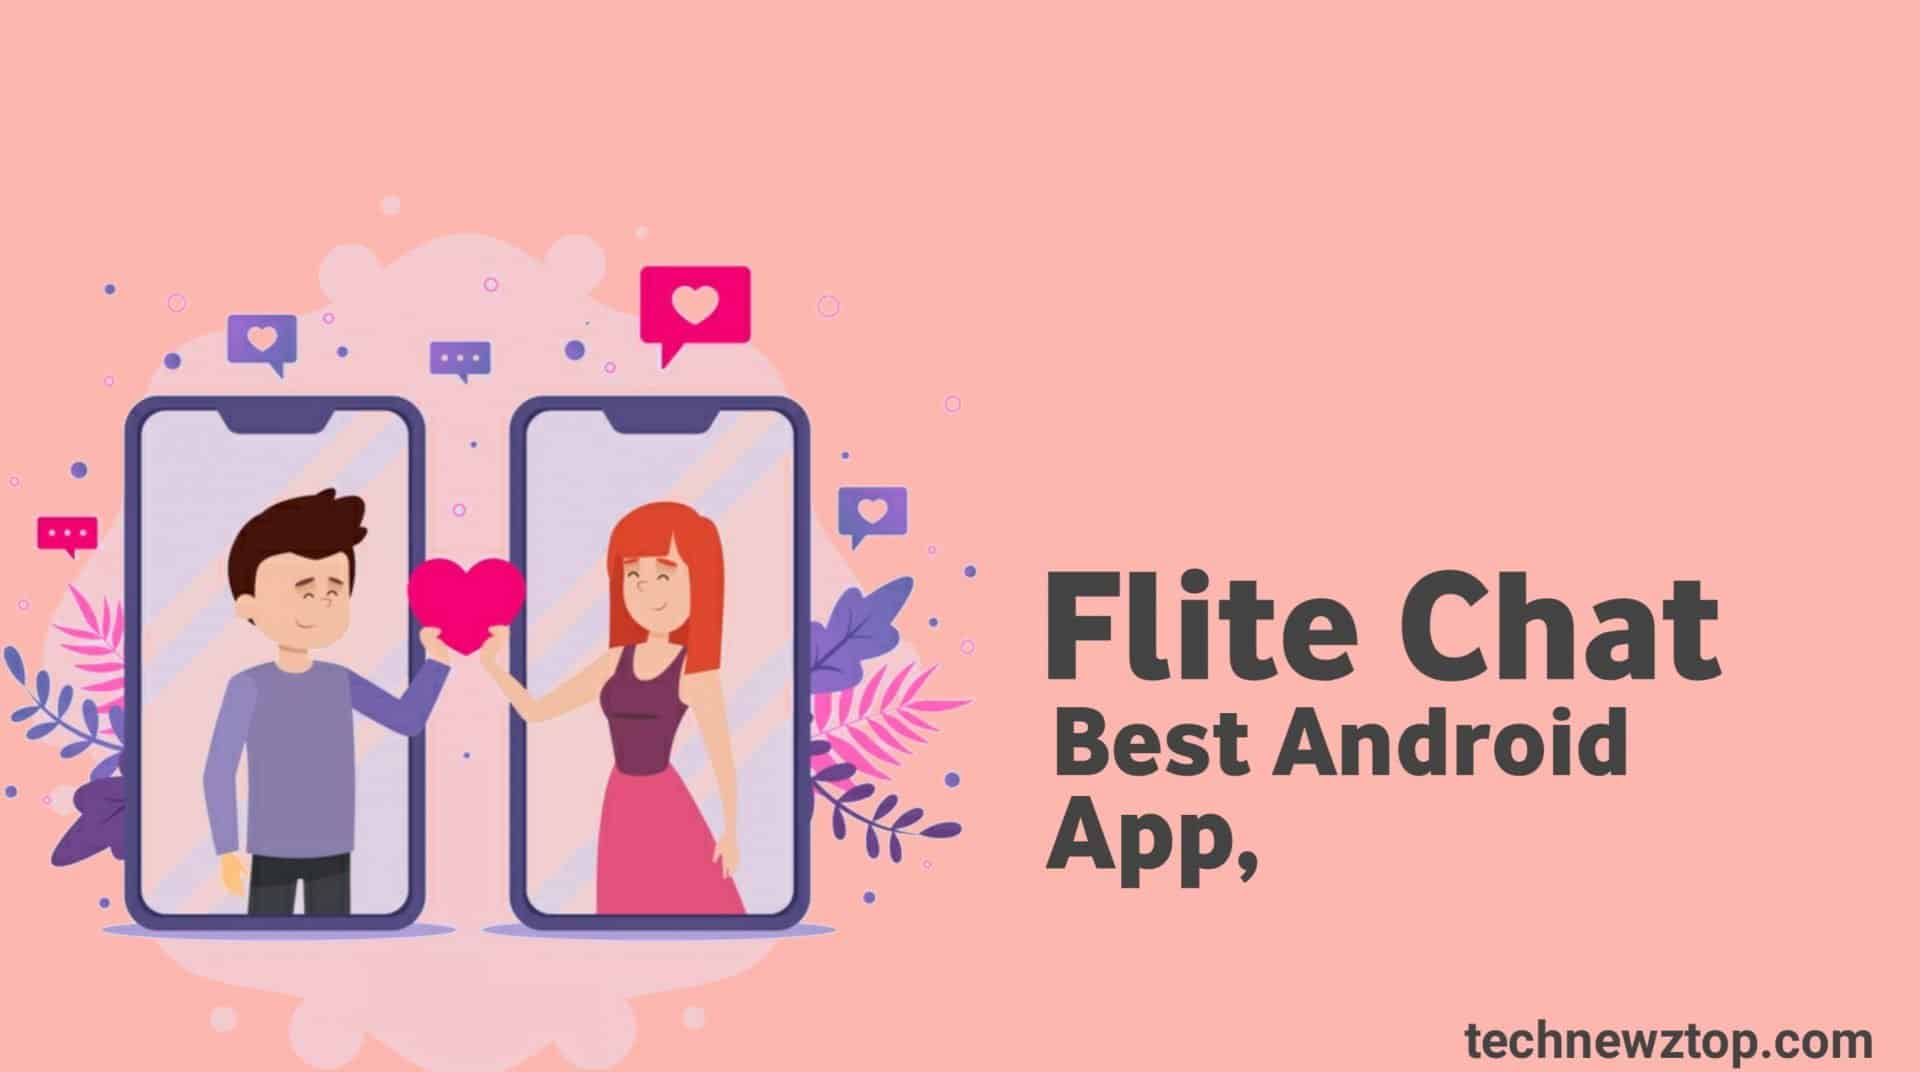 Beste kostenlos flirt app